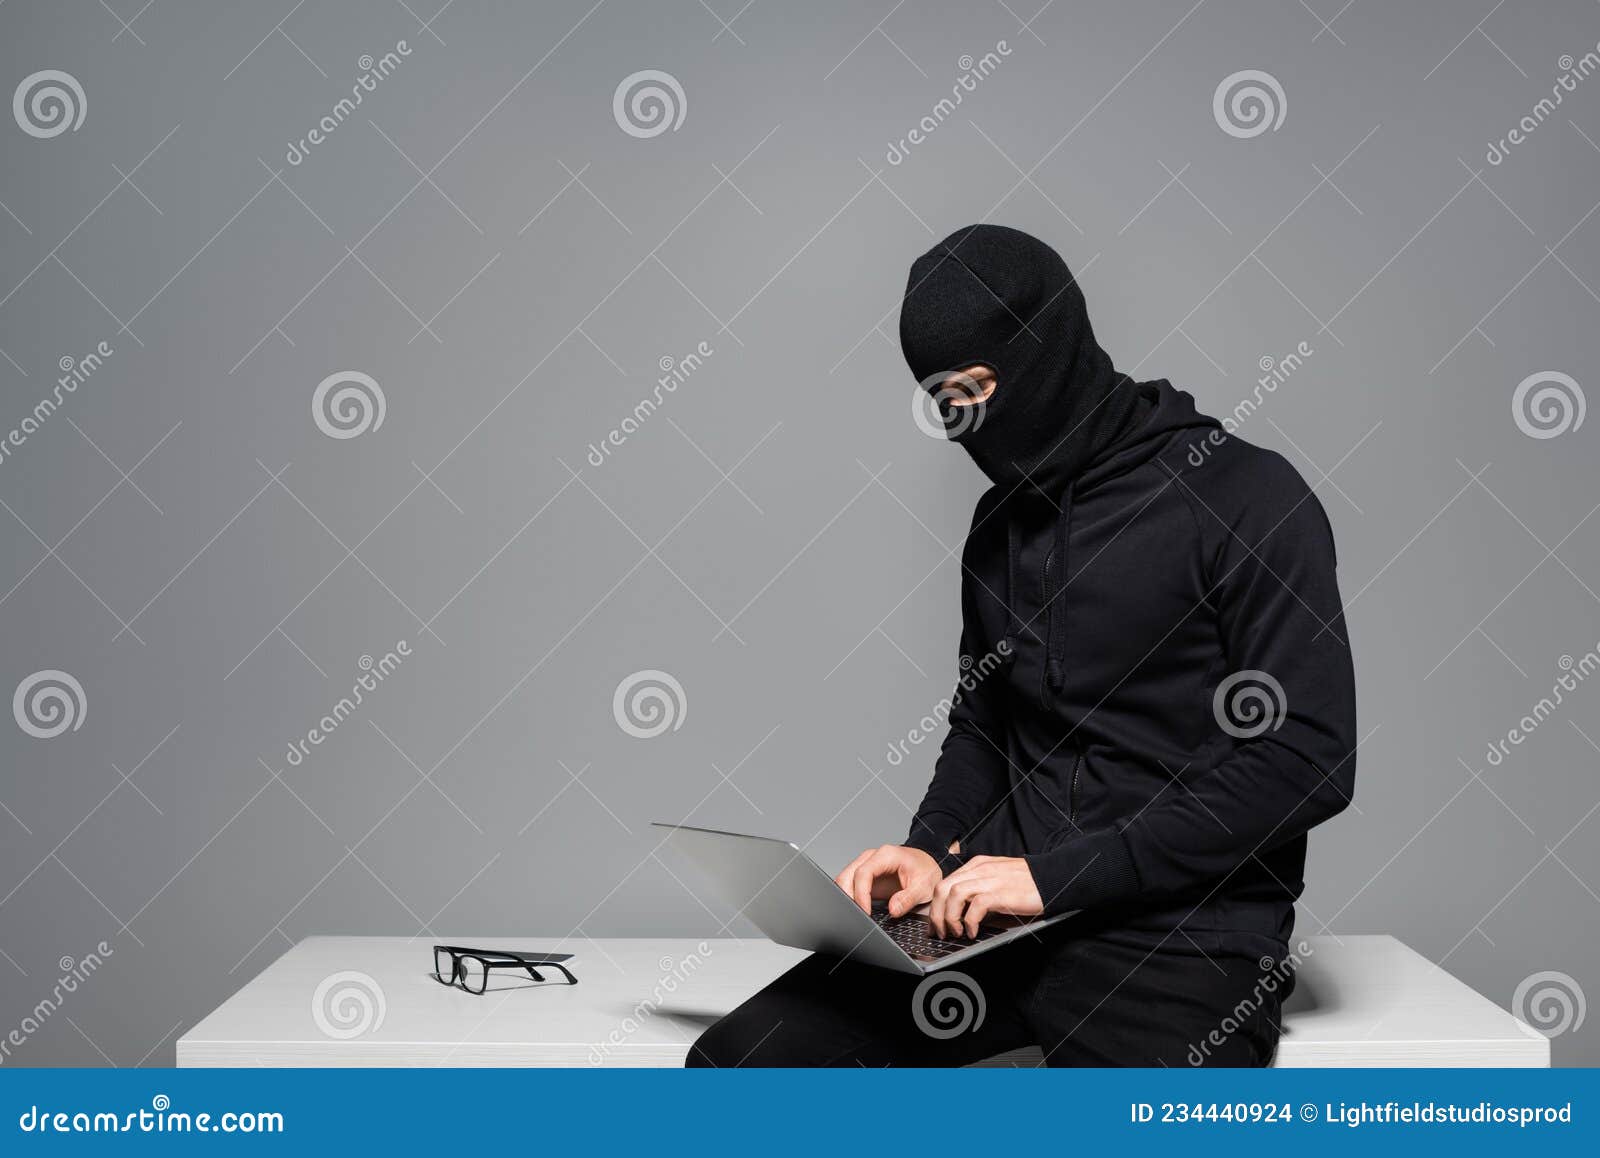 Hacker in Balaclava Using Laptop Near Stock Photo - Image of technology ...